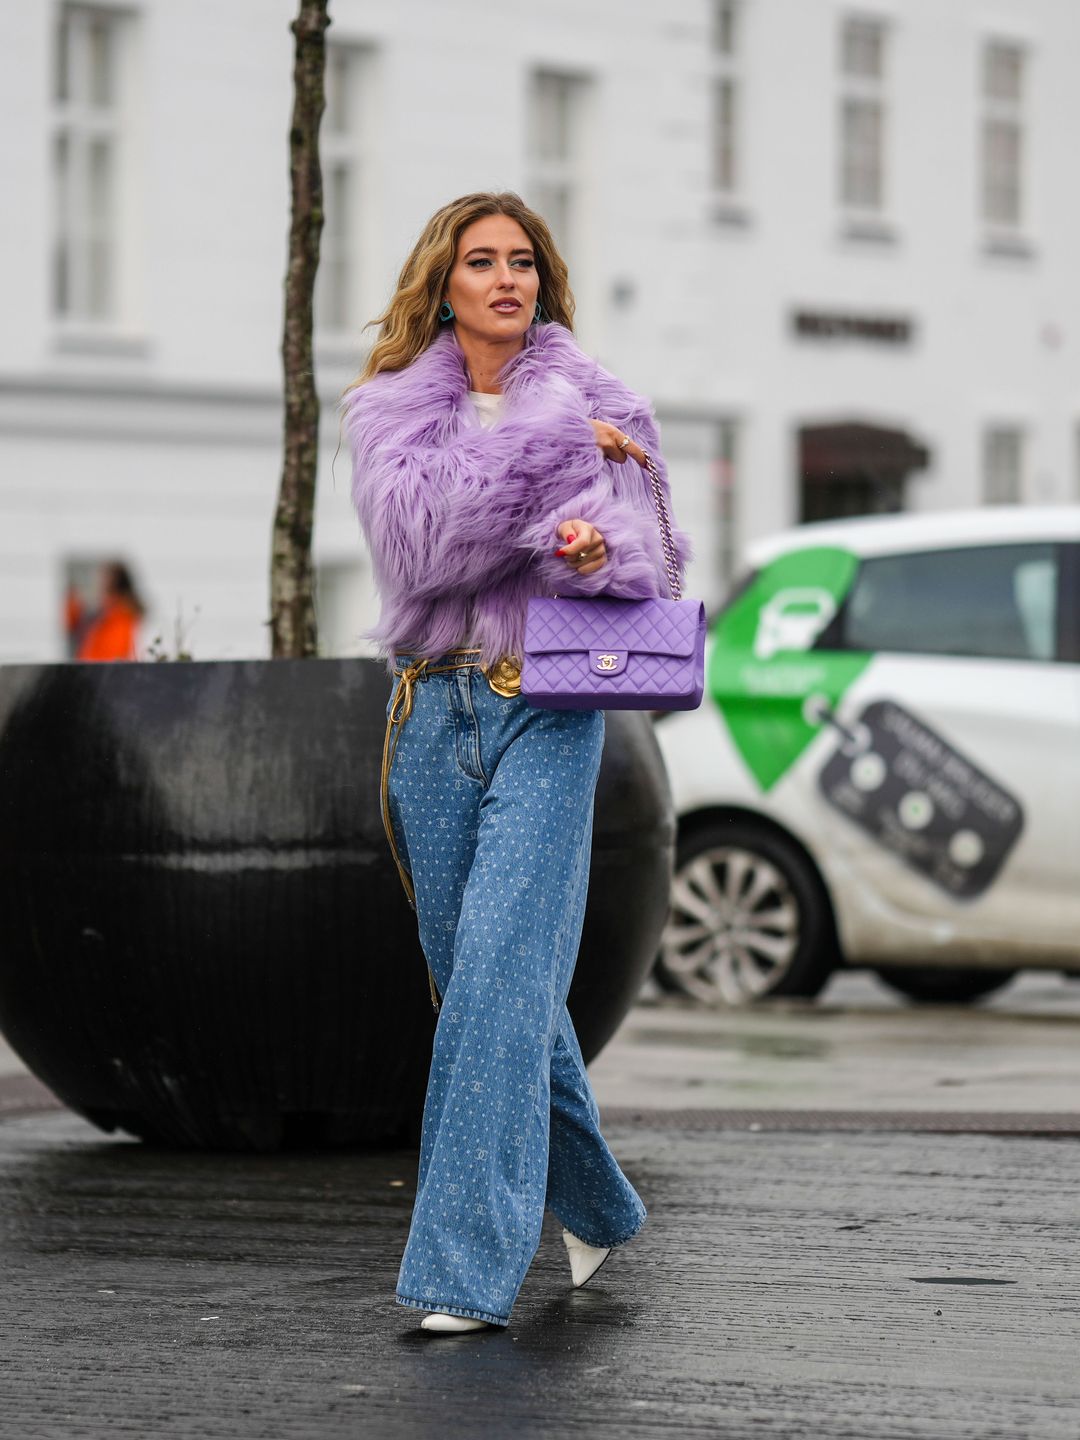 Emili Sindlev wearing a fluffy purple jacket 